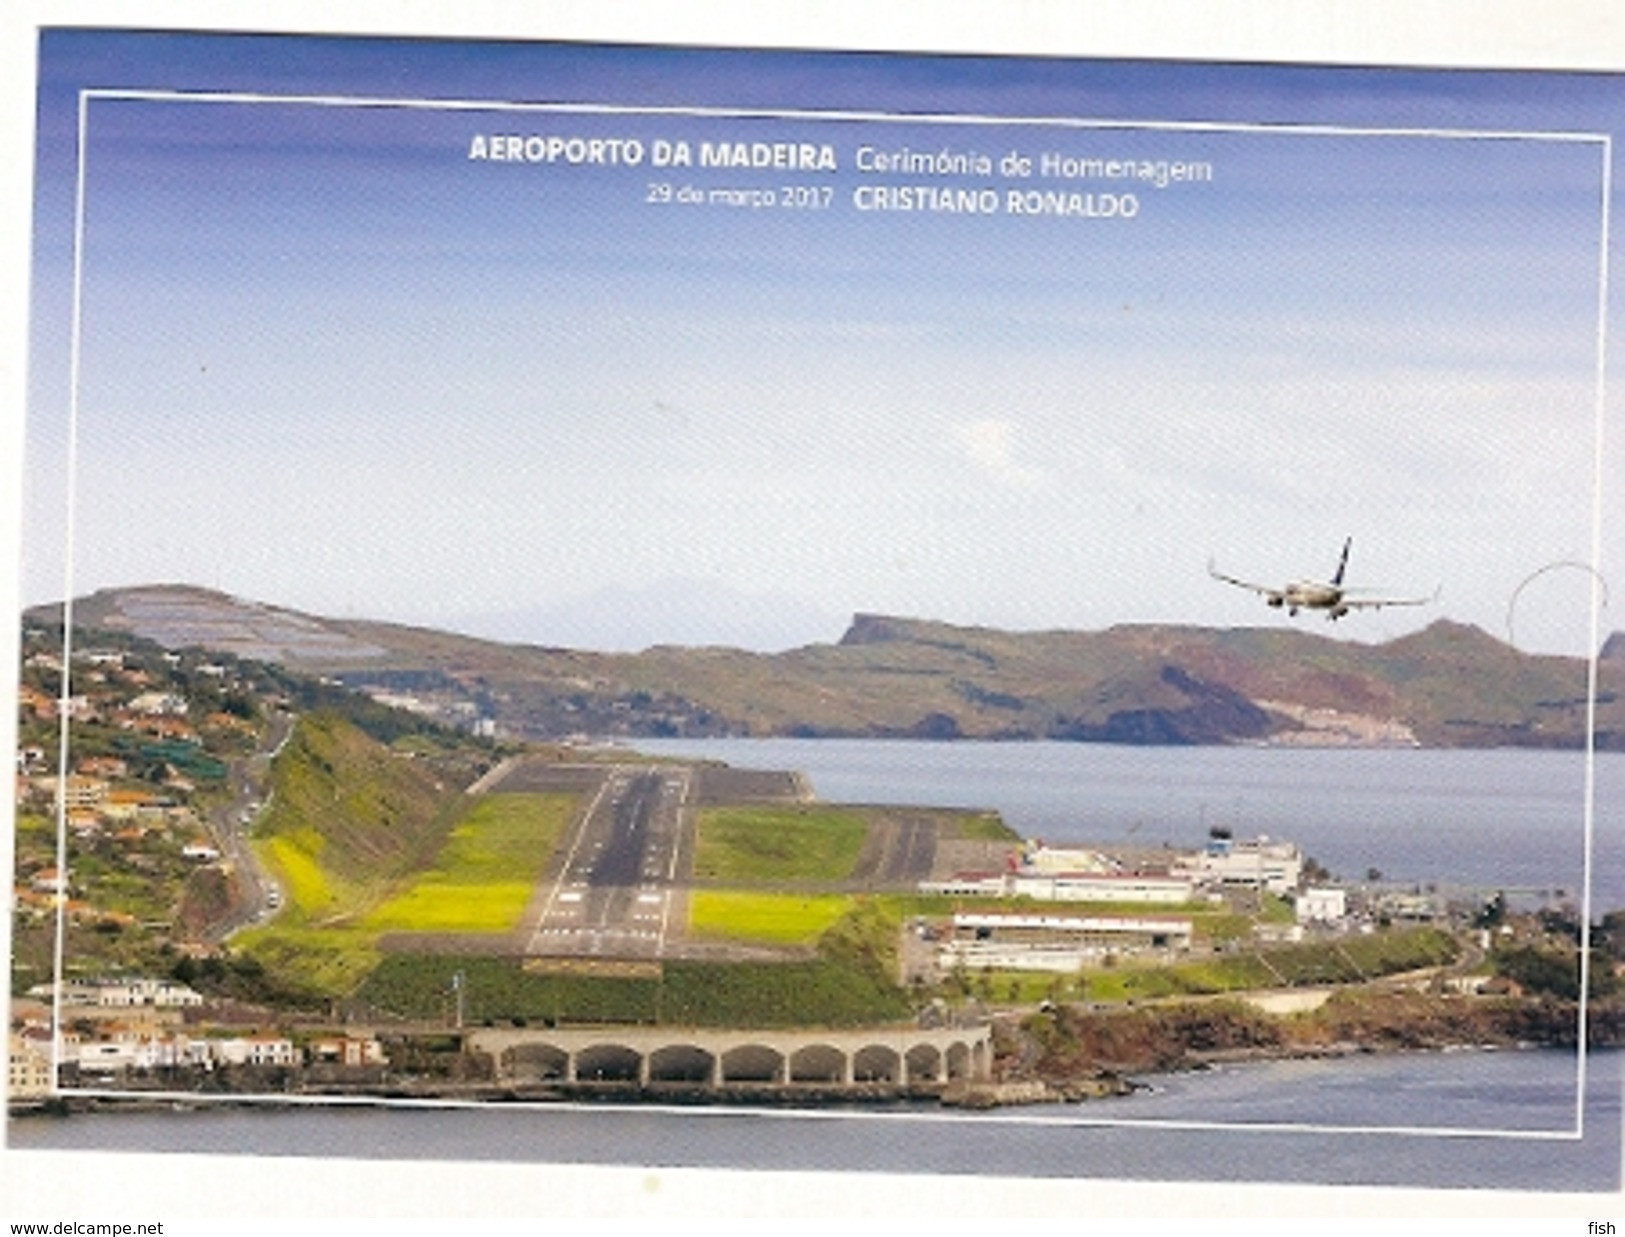 Portugal ** & Postal Stationery, Madeira Airport, Ceremony And Tribute To Cristiano Ronaldo 2017 (6575) - Ganzsachen